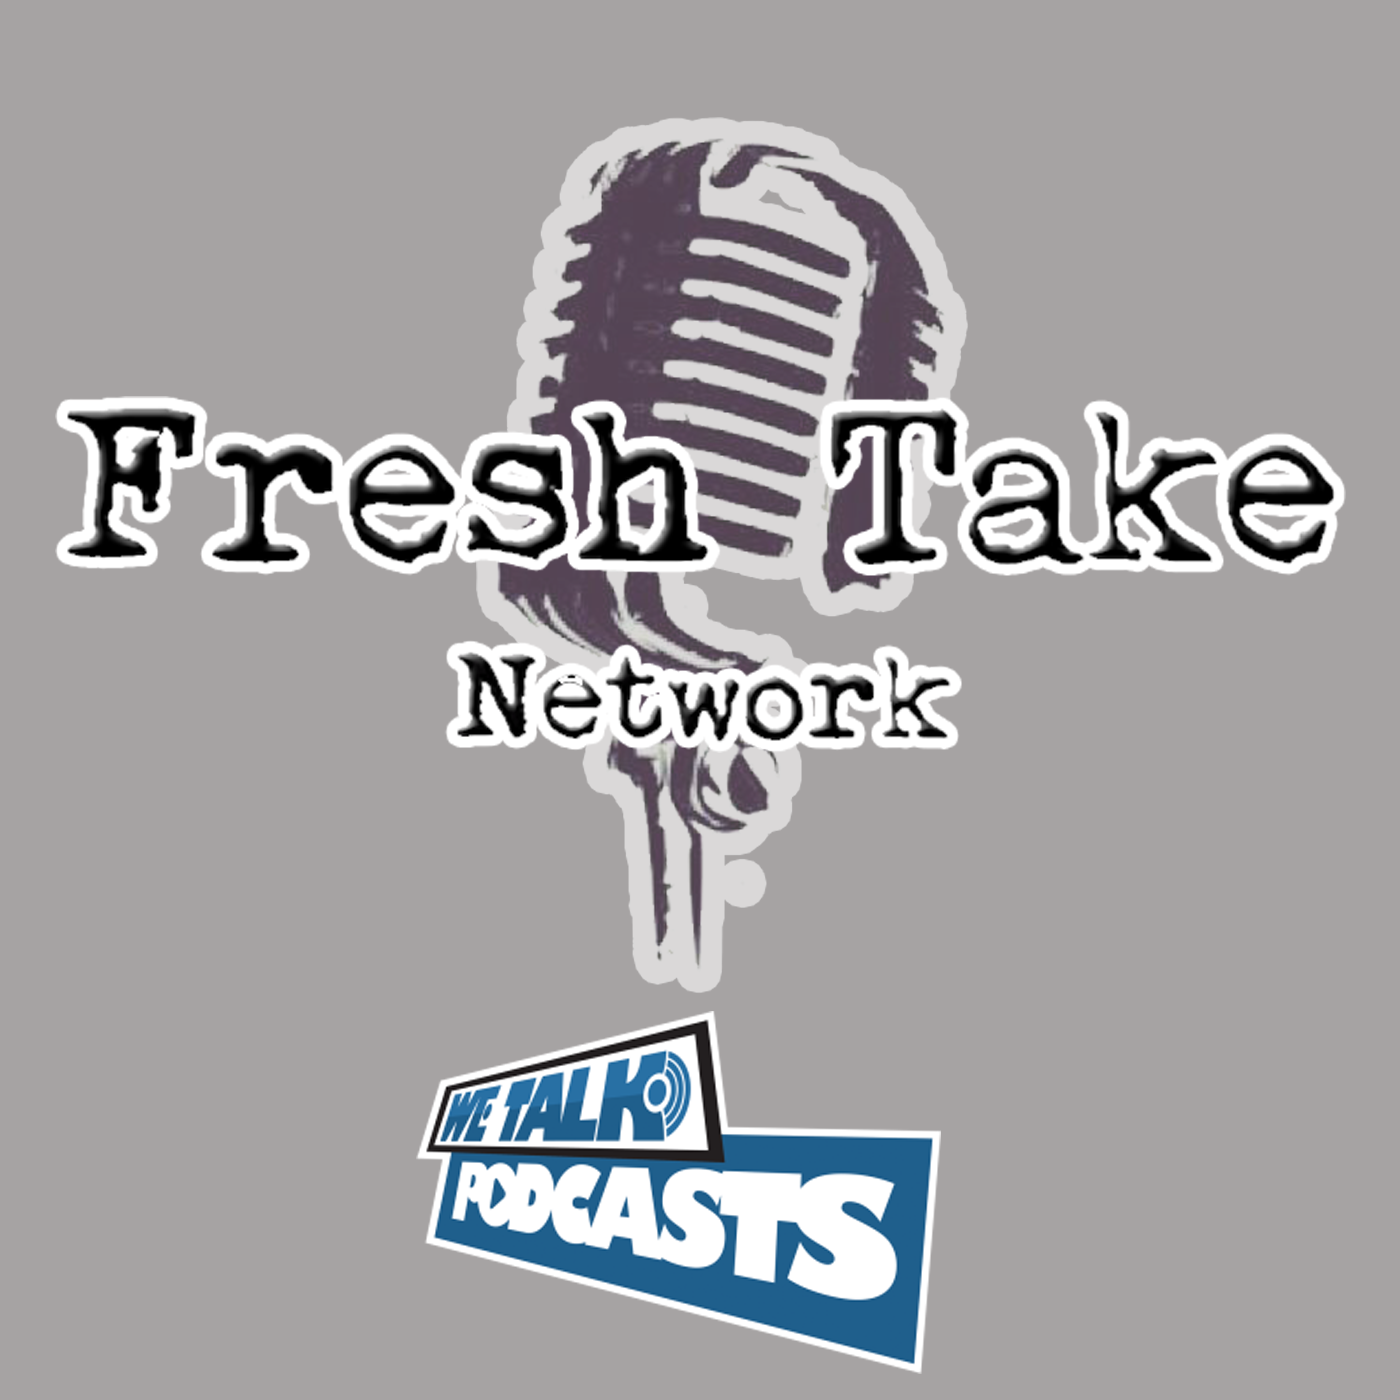 Fresh Take Network  |  We Talk Podcasts